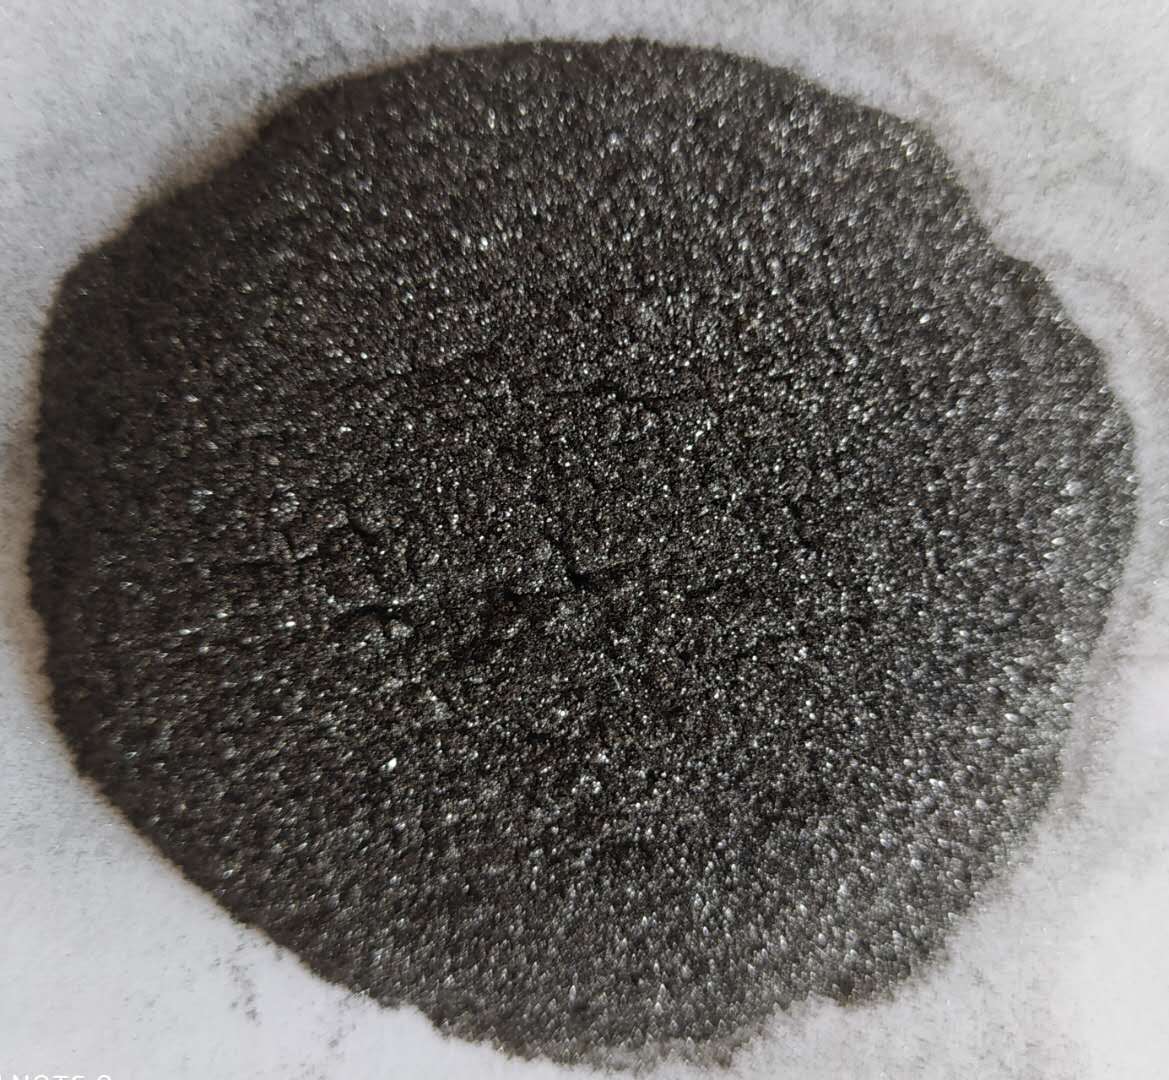 crystalline flake graphite